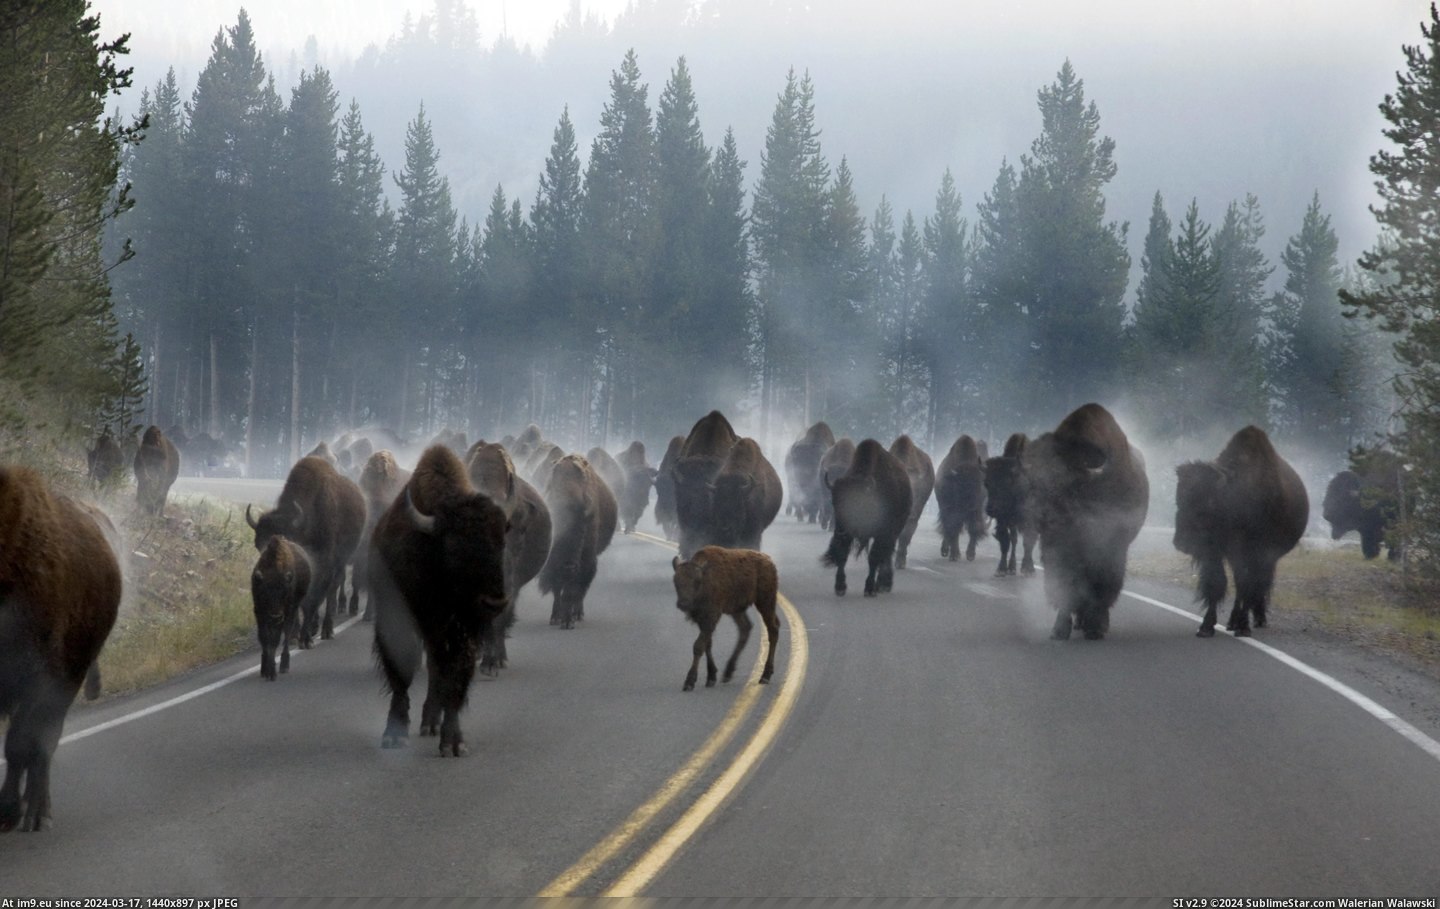 #Park #Morning #Traffic #Yellowstone #Rush #National #Hour [Pics] Morning rush hour traffic in Yellowstone National Park Pic. (Изображение из альбом My r/PICS favs))